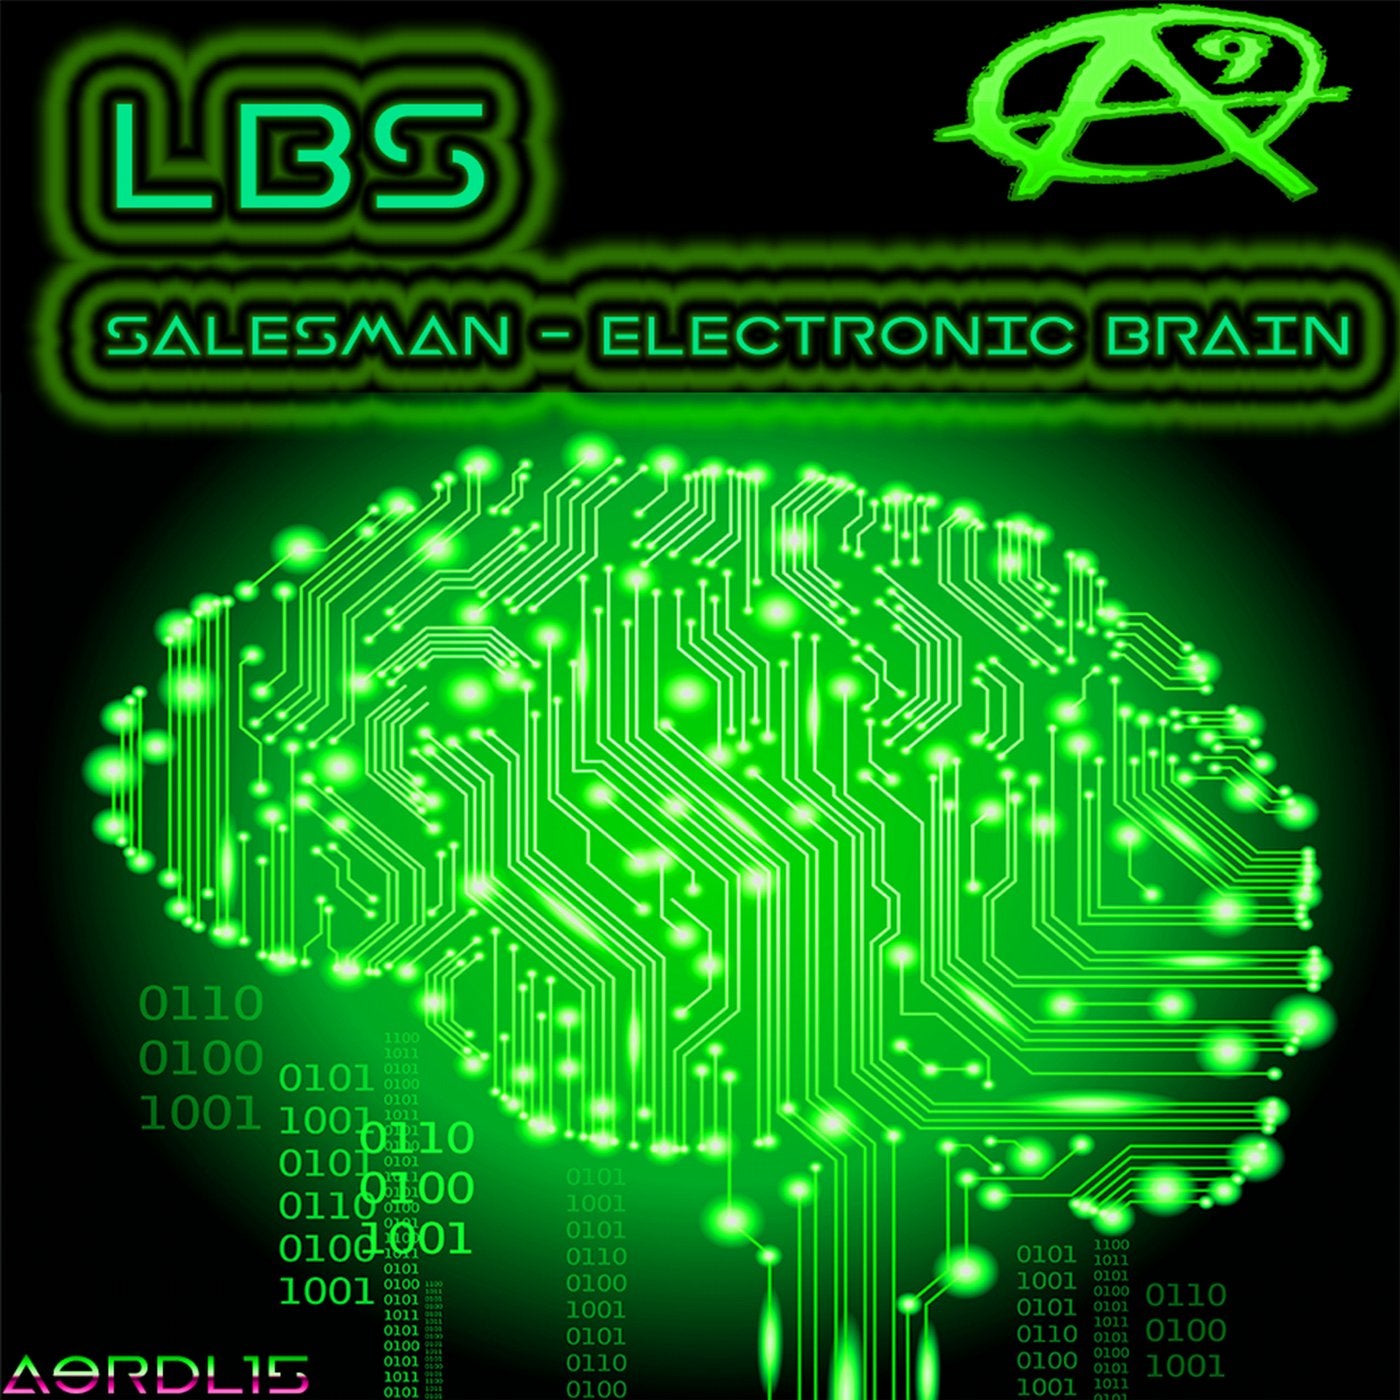 Electronic Brain / Salesman